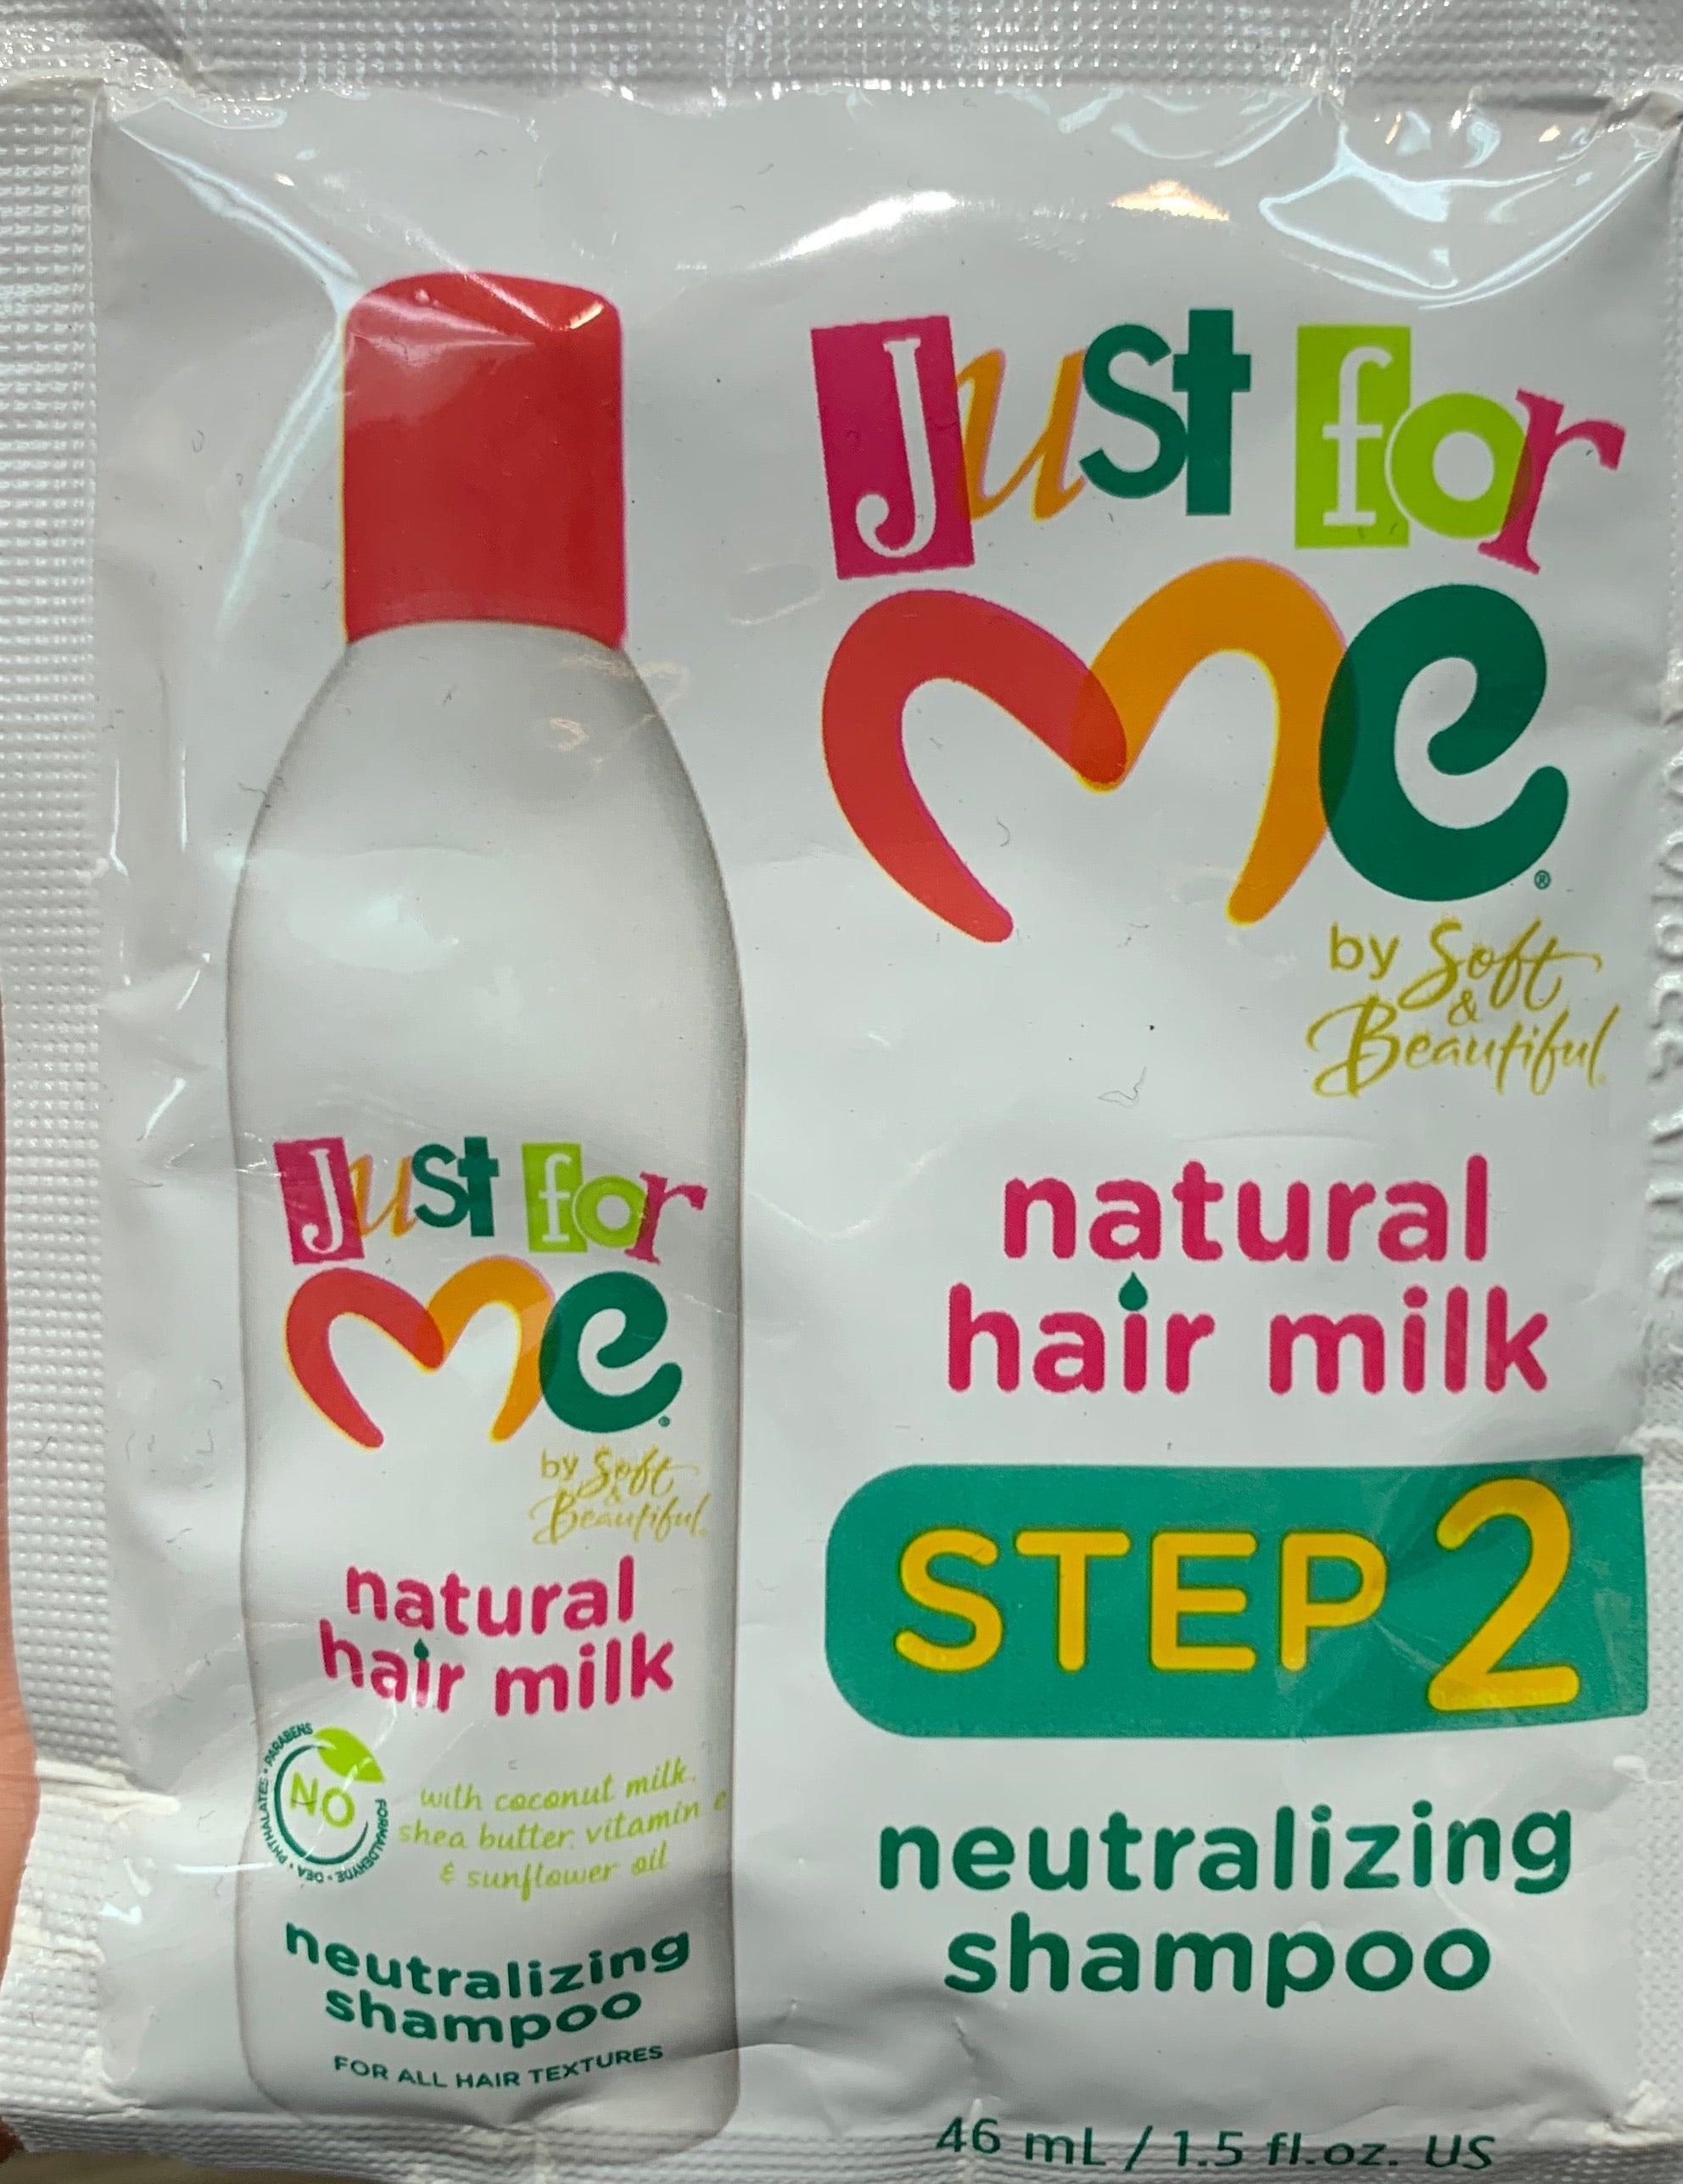 Just for me natural hair milk step 2 shampoo 1.5oz